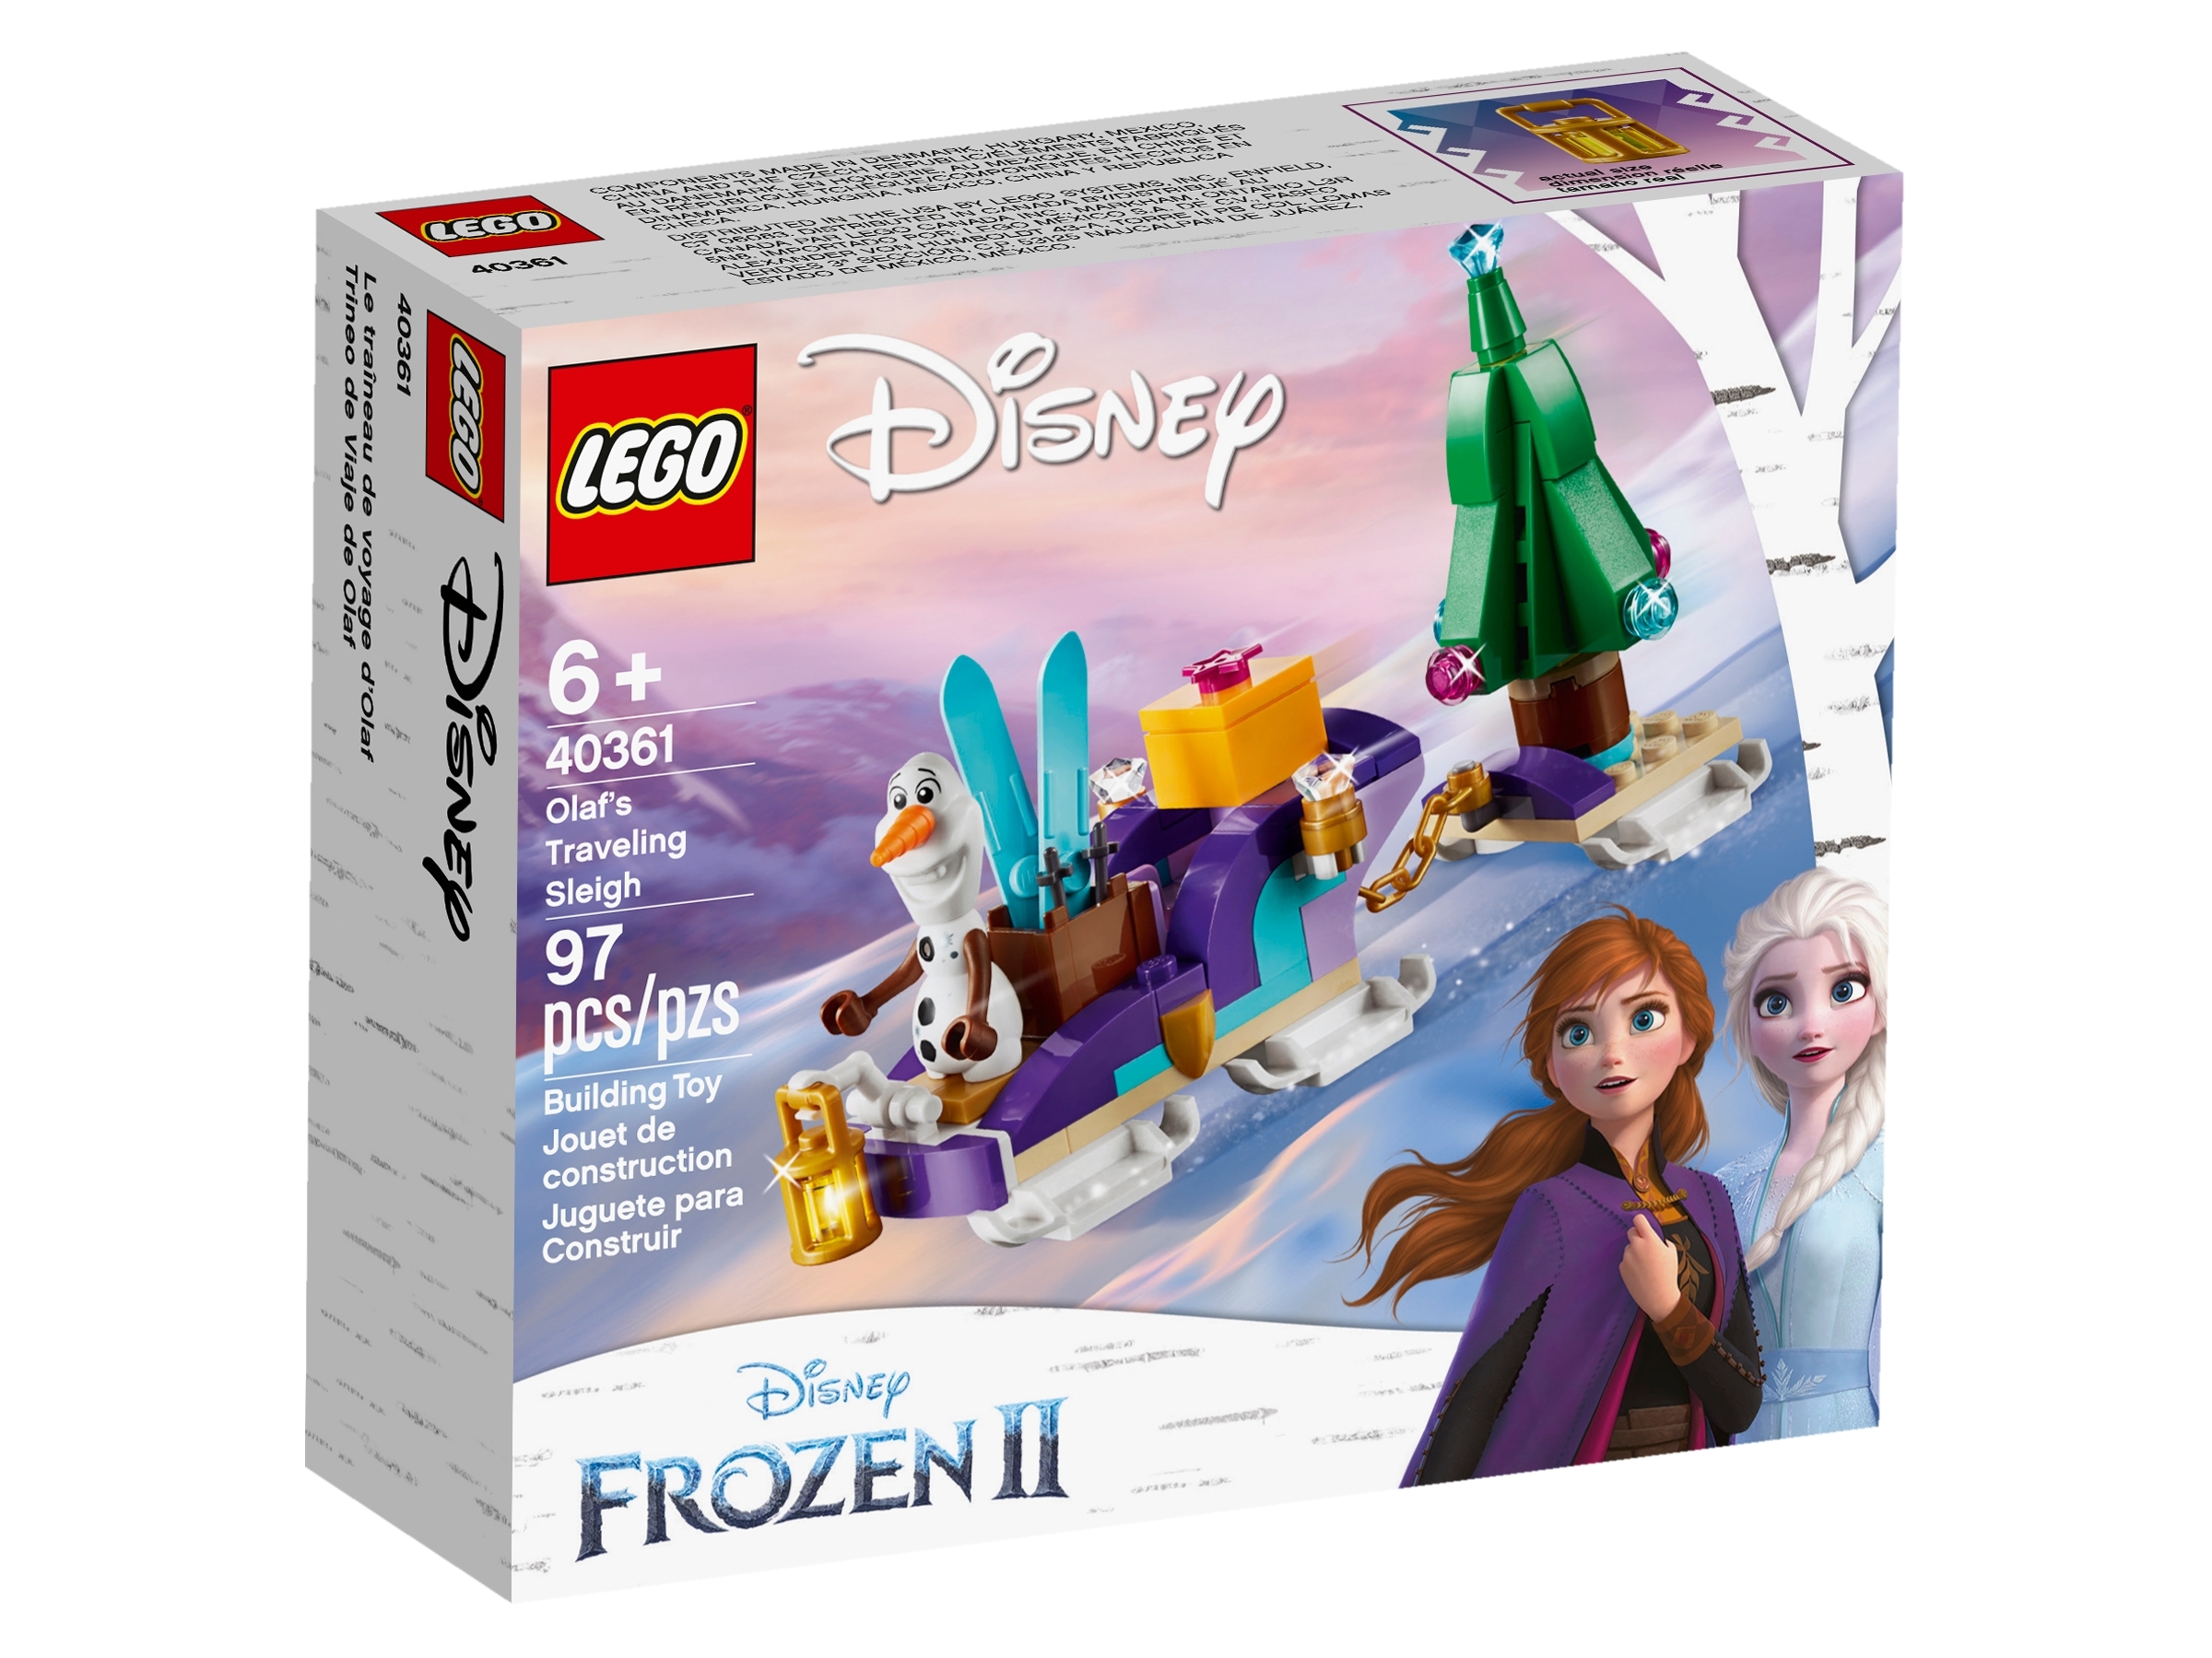 Lego Disney Frozen Exclusivo Set 40361 